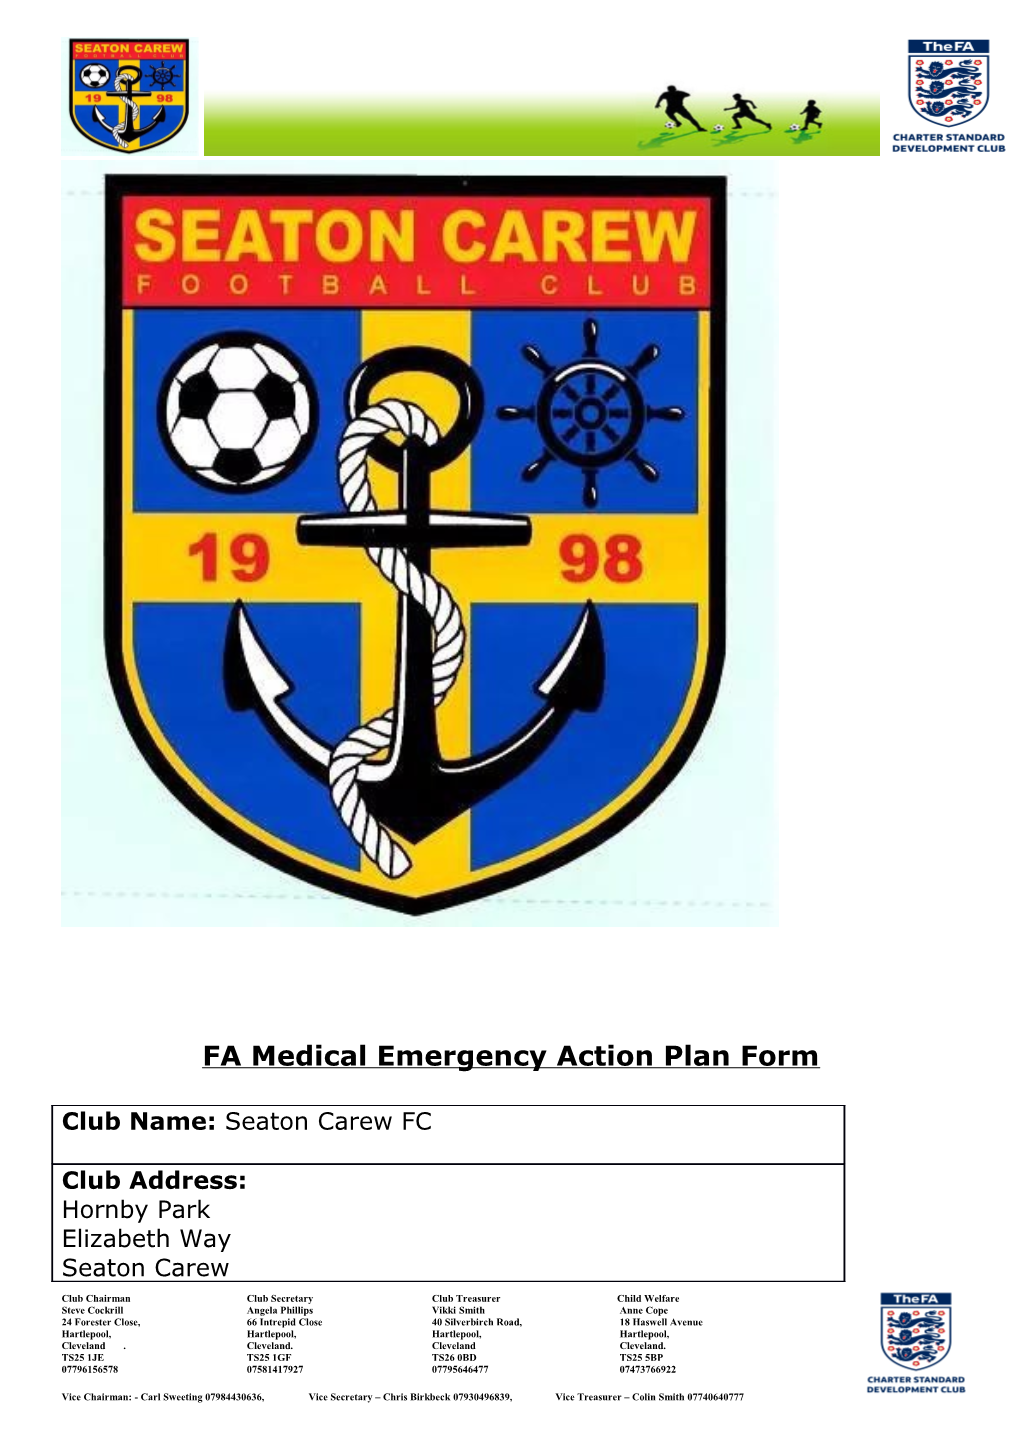 FA Medical Emergency Action Plan Form